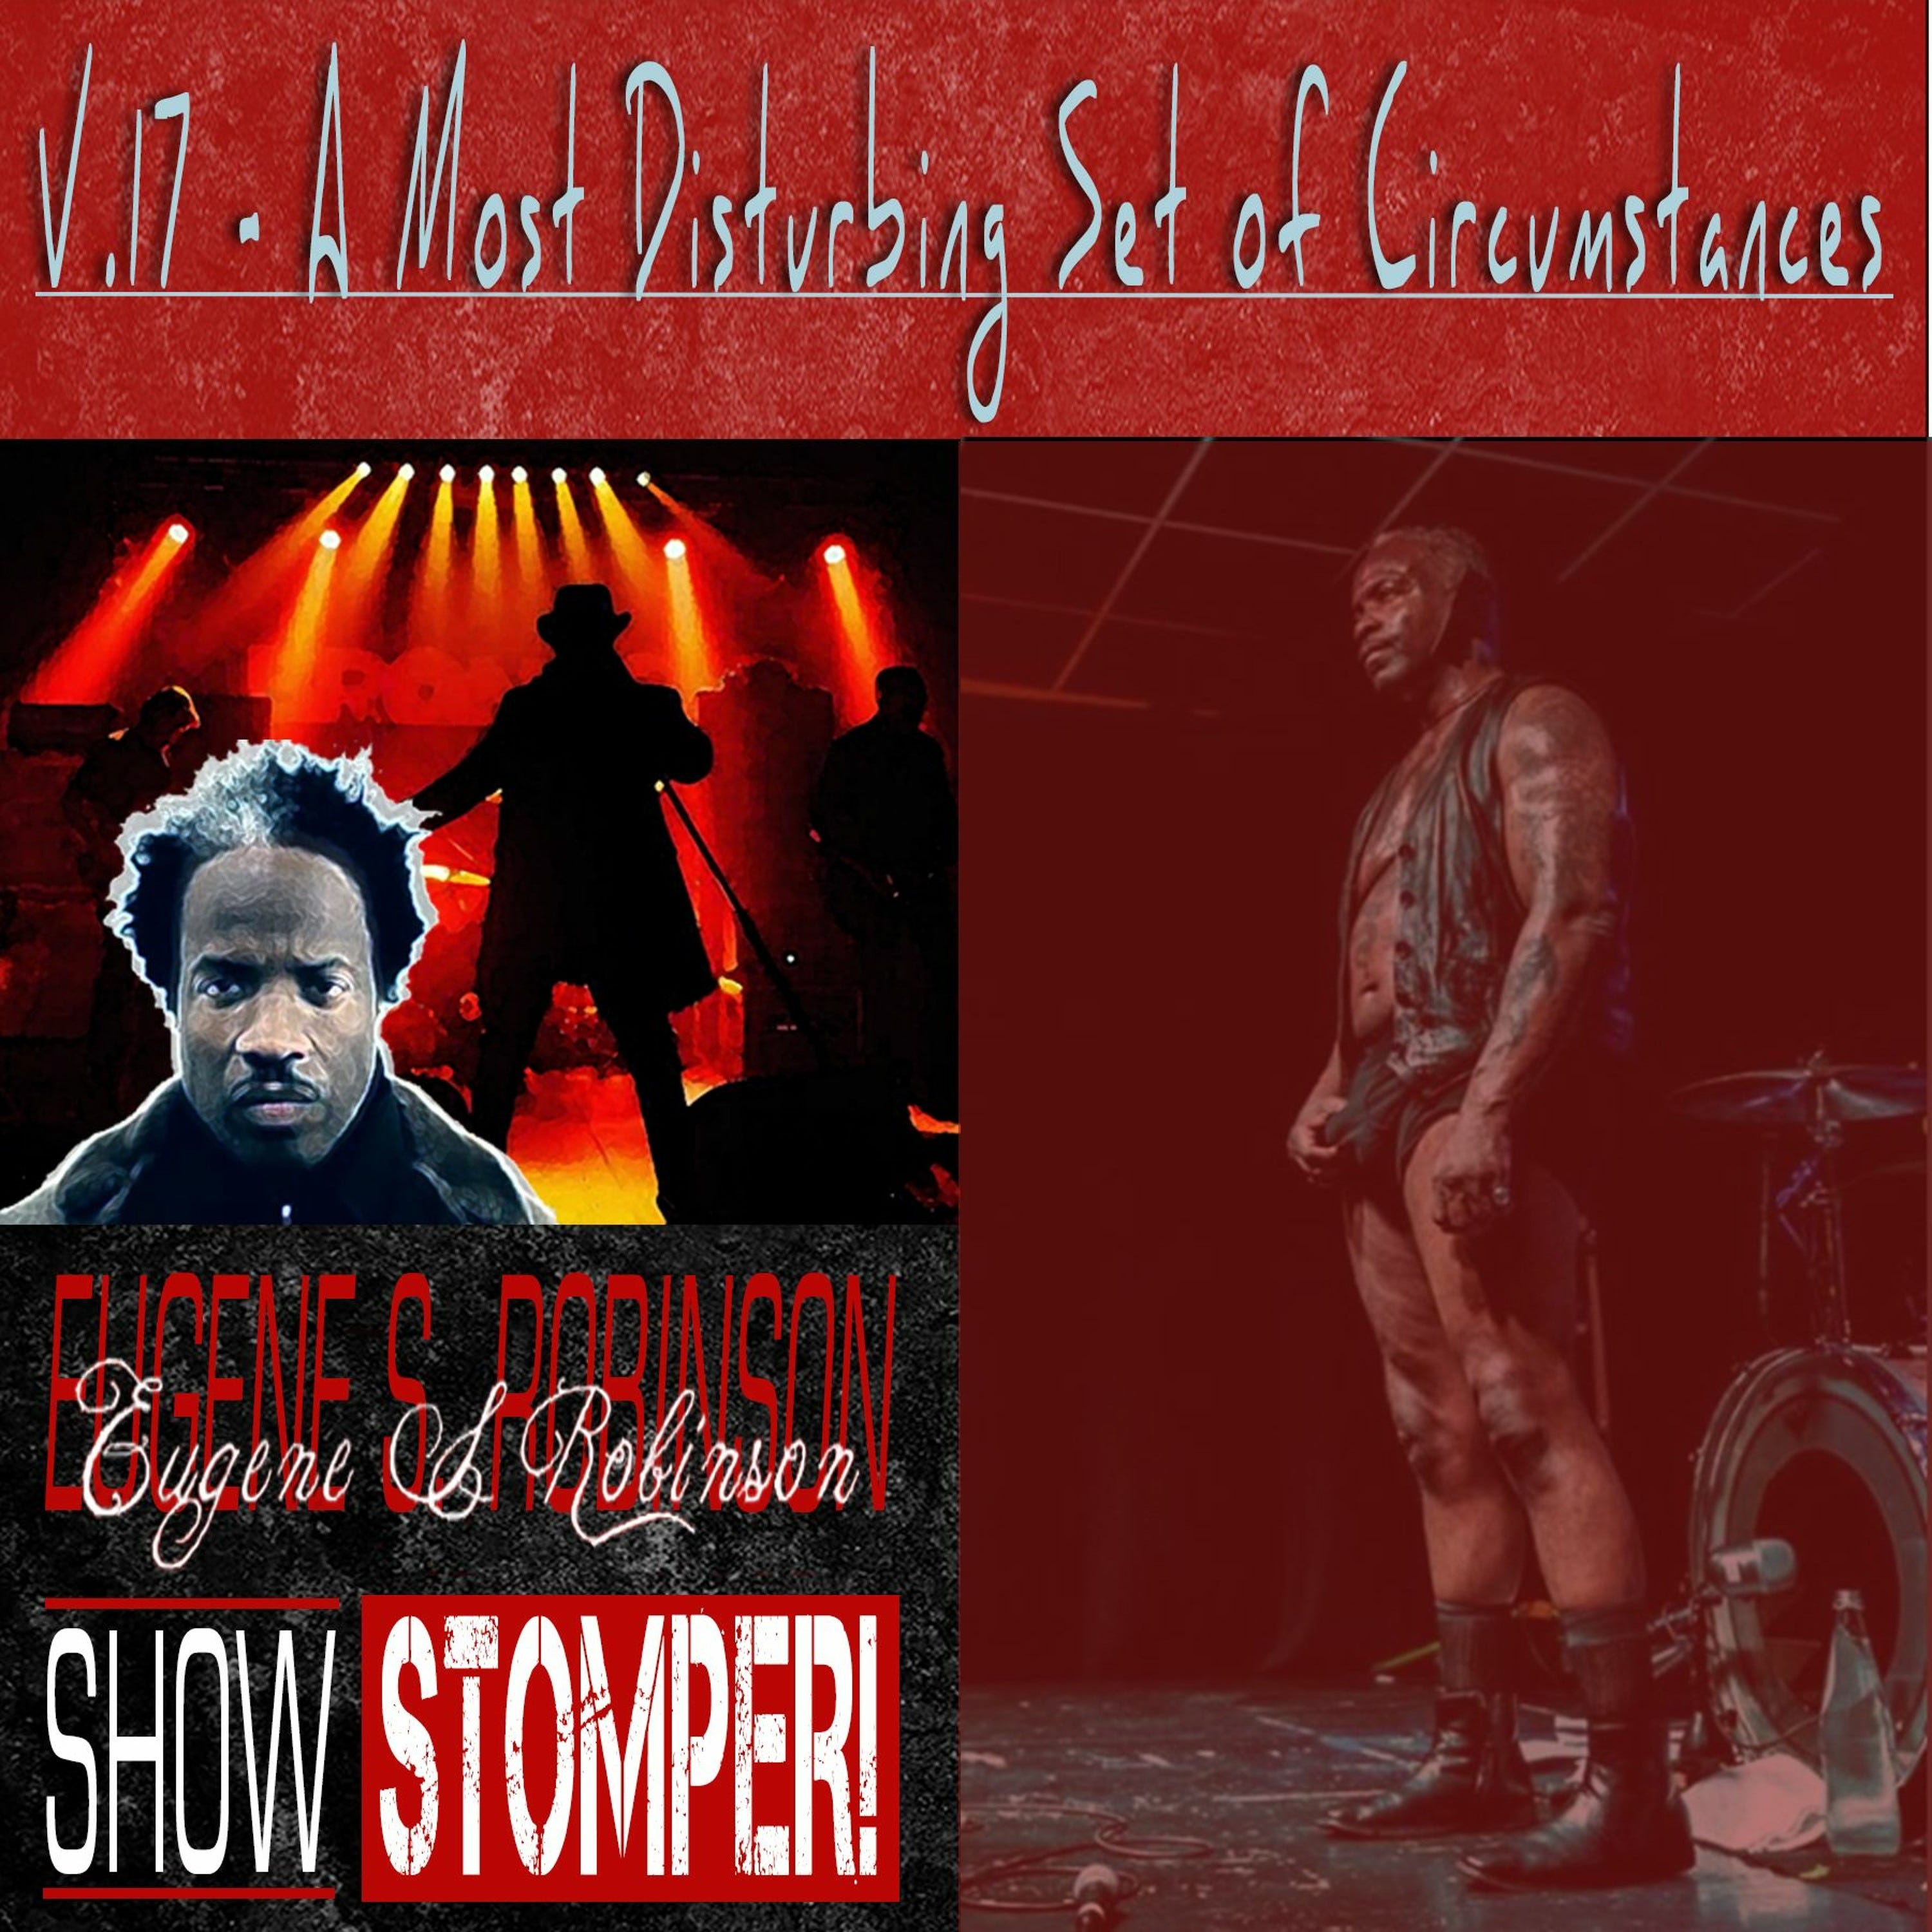 The Eugene S. Robinson Show Stomper! V.17 - A Most Disturbing Set Of Circumstances